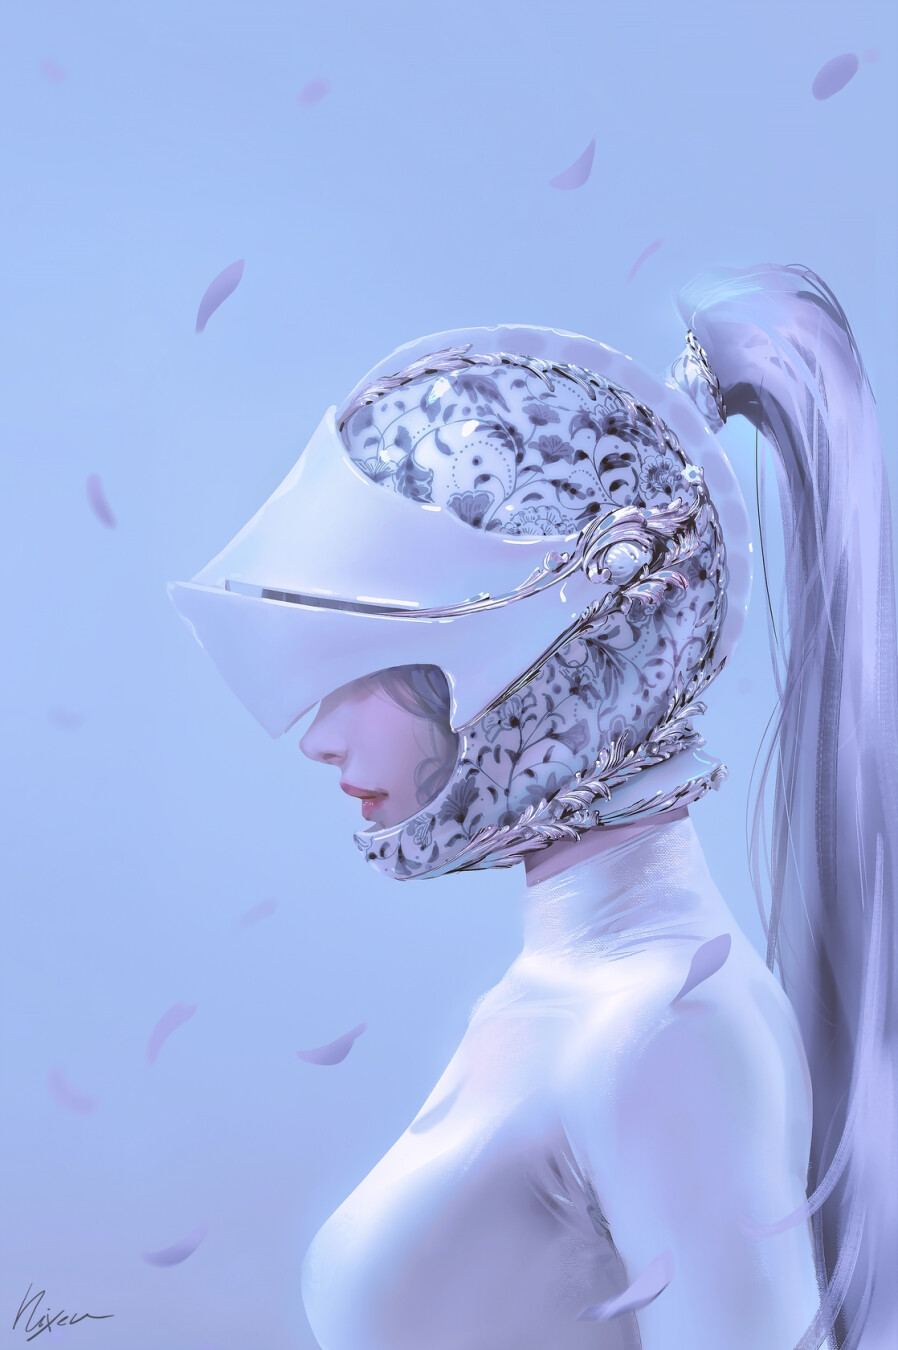 General 898x1350 Nixeu drawing women profile ponytail helmet covered eye(s) feathers digital art portrait display